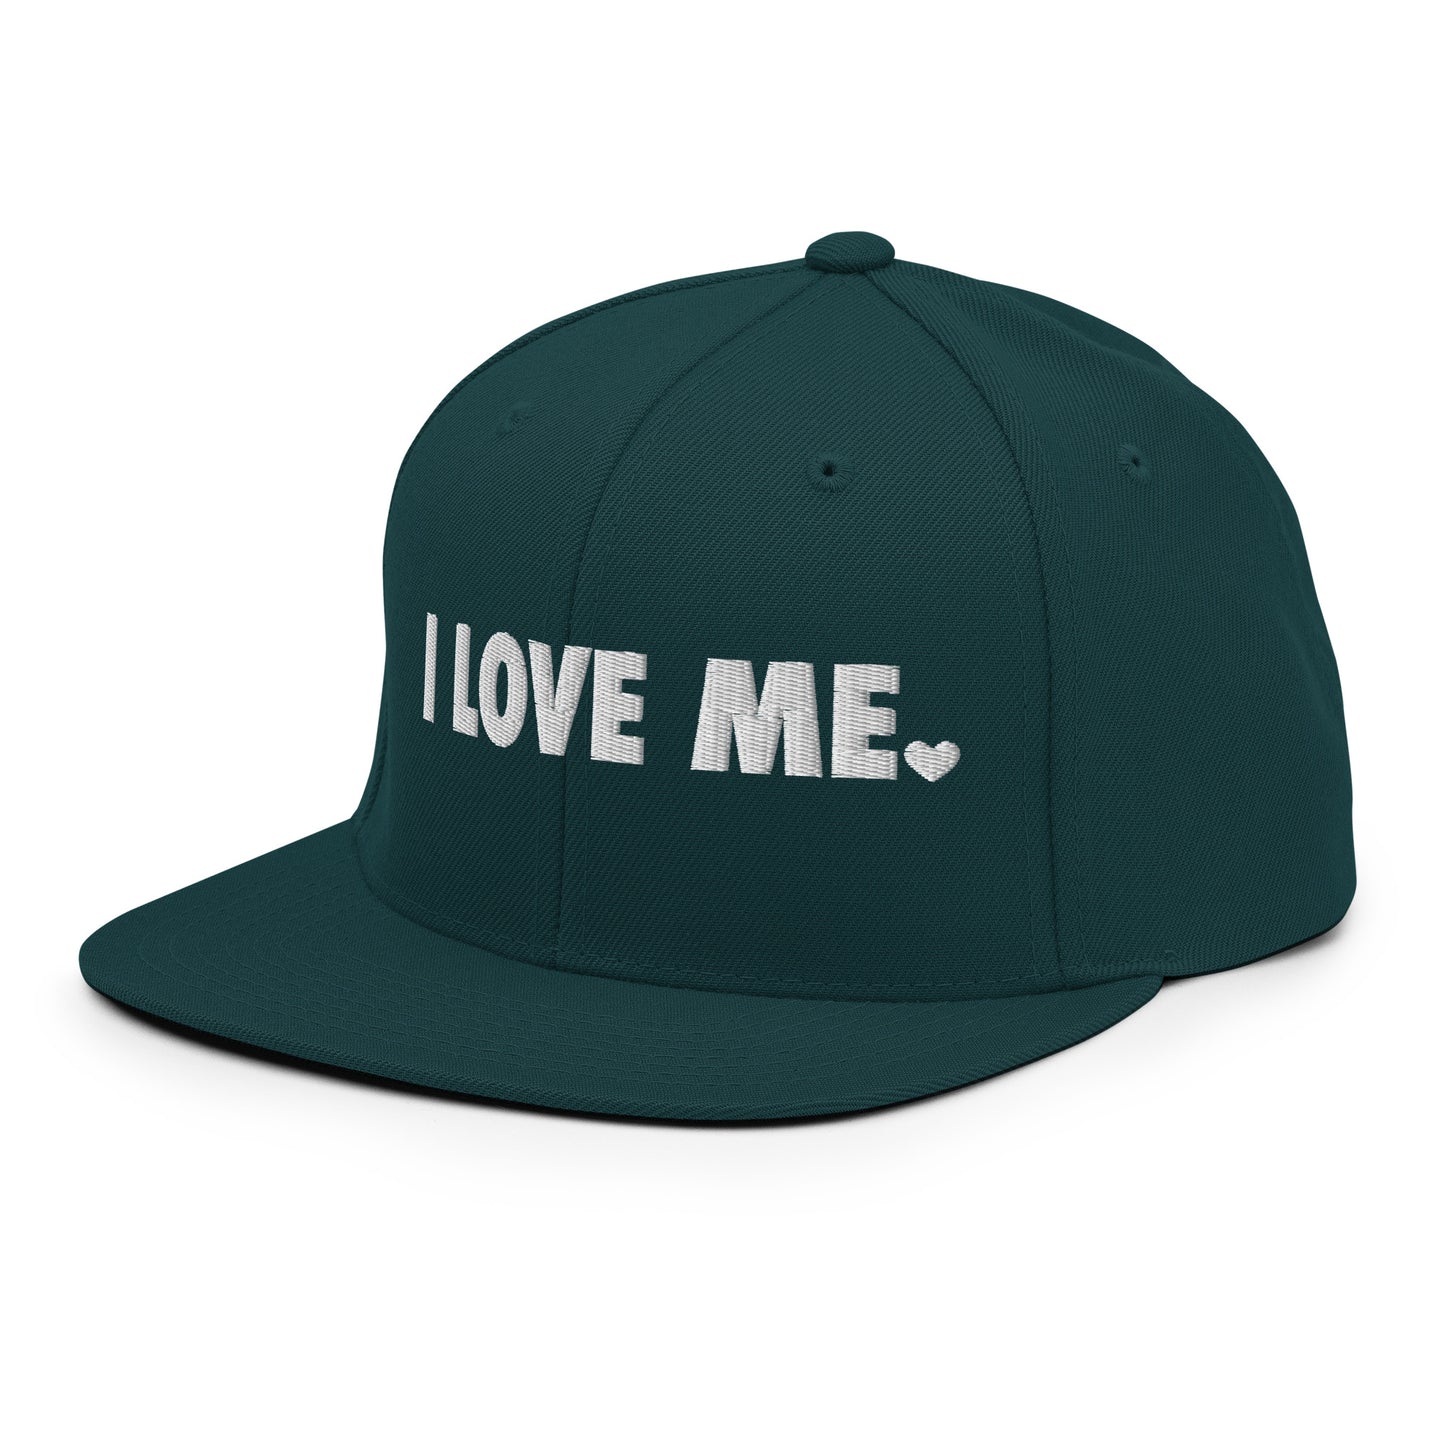 I love me Green Snapback Hat